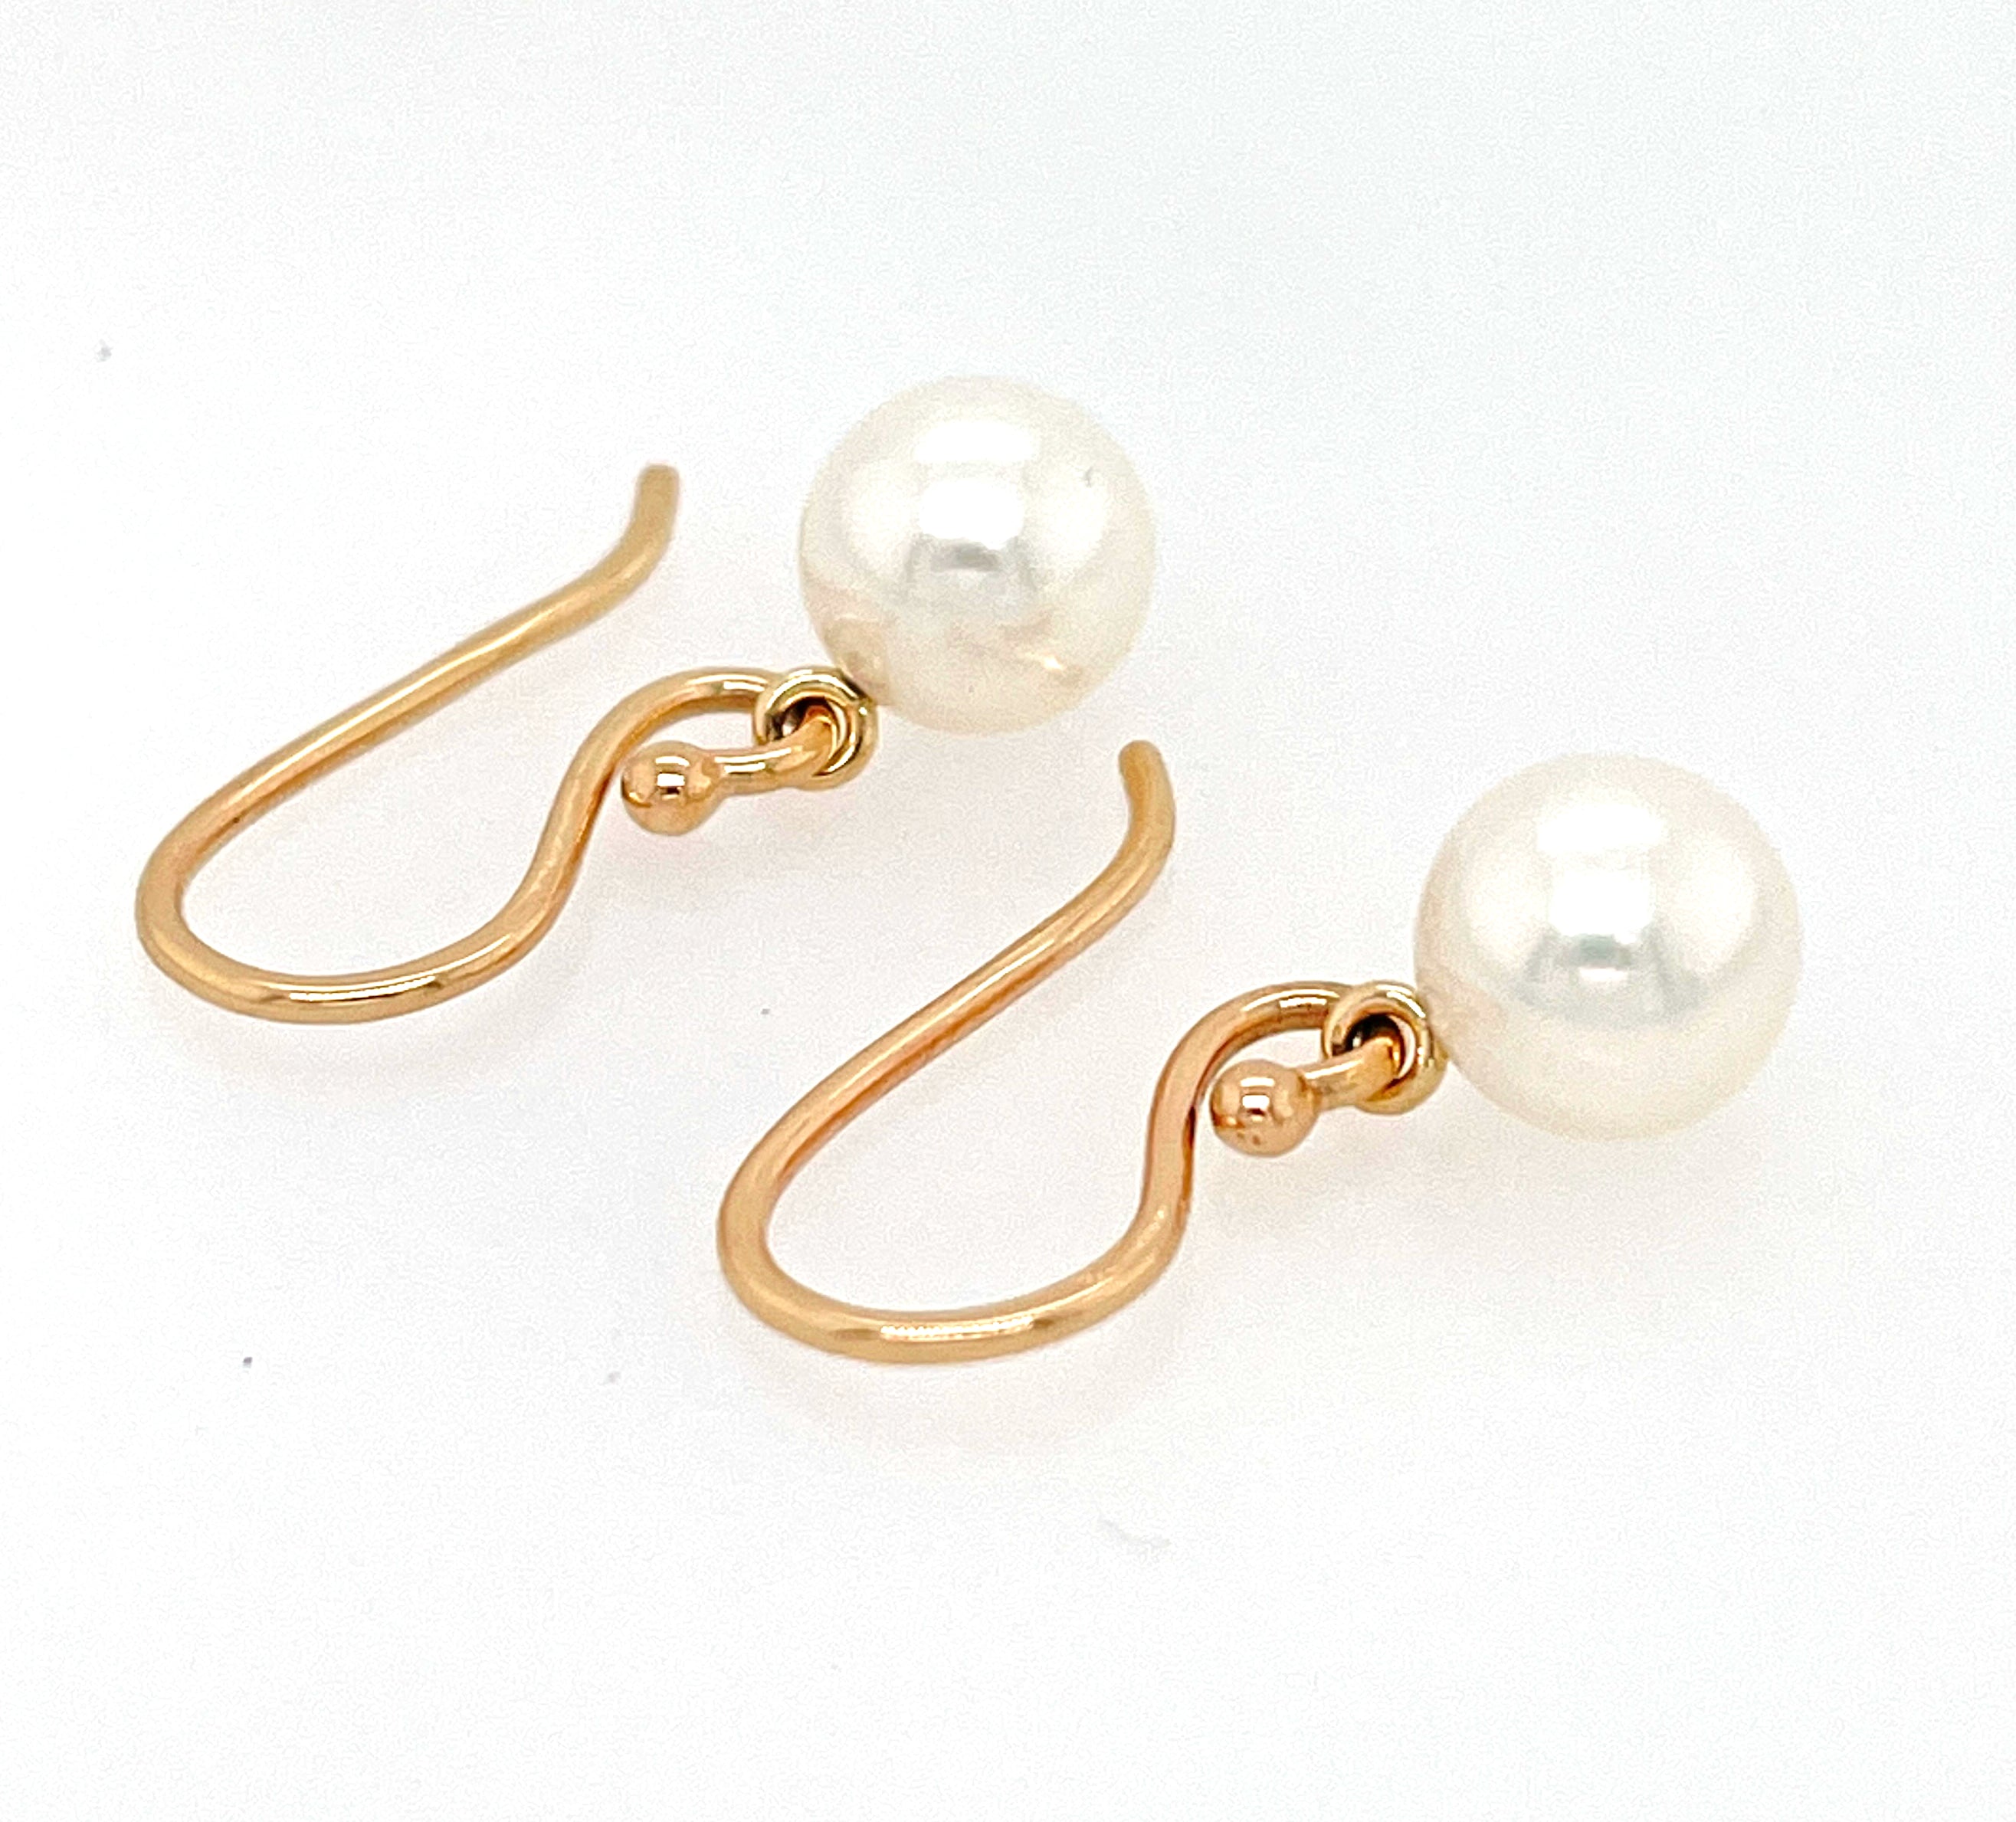 Pearl Drop Earrings, White Round Freshwater Cultured Pearl Earrings, Solid 14k Gold Pearl Earrings